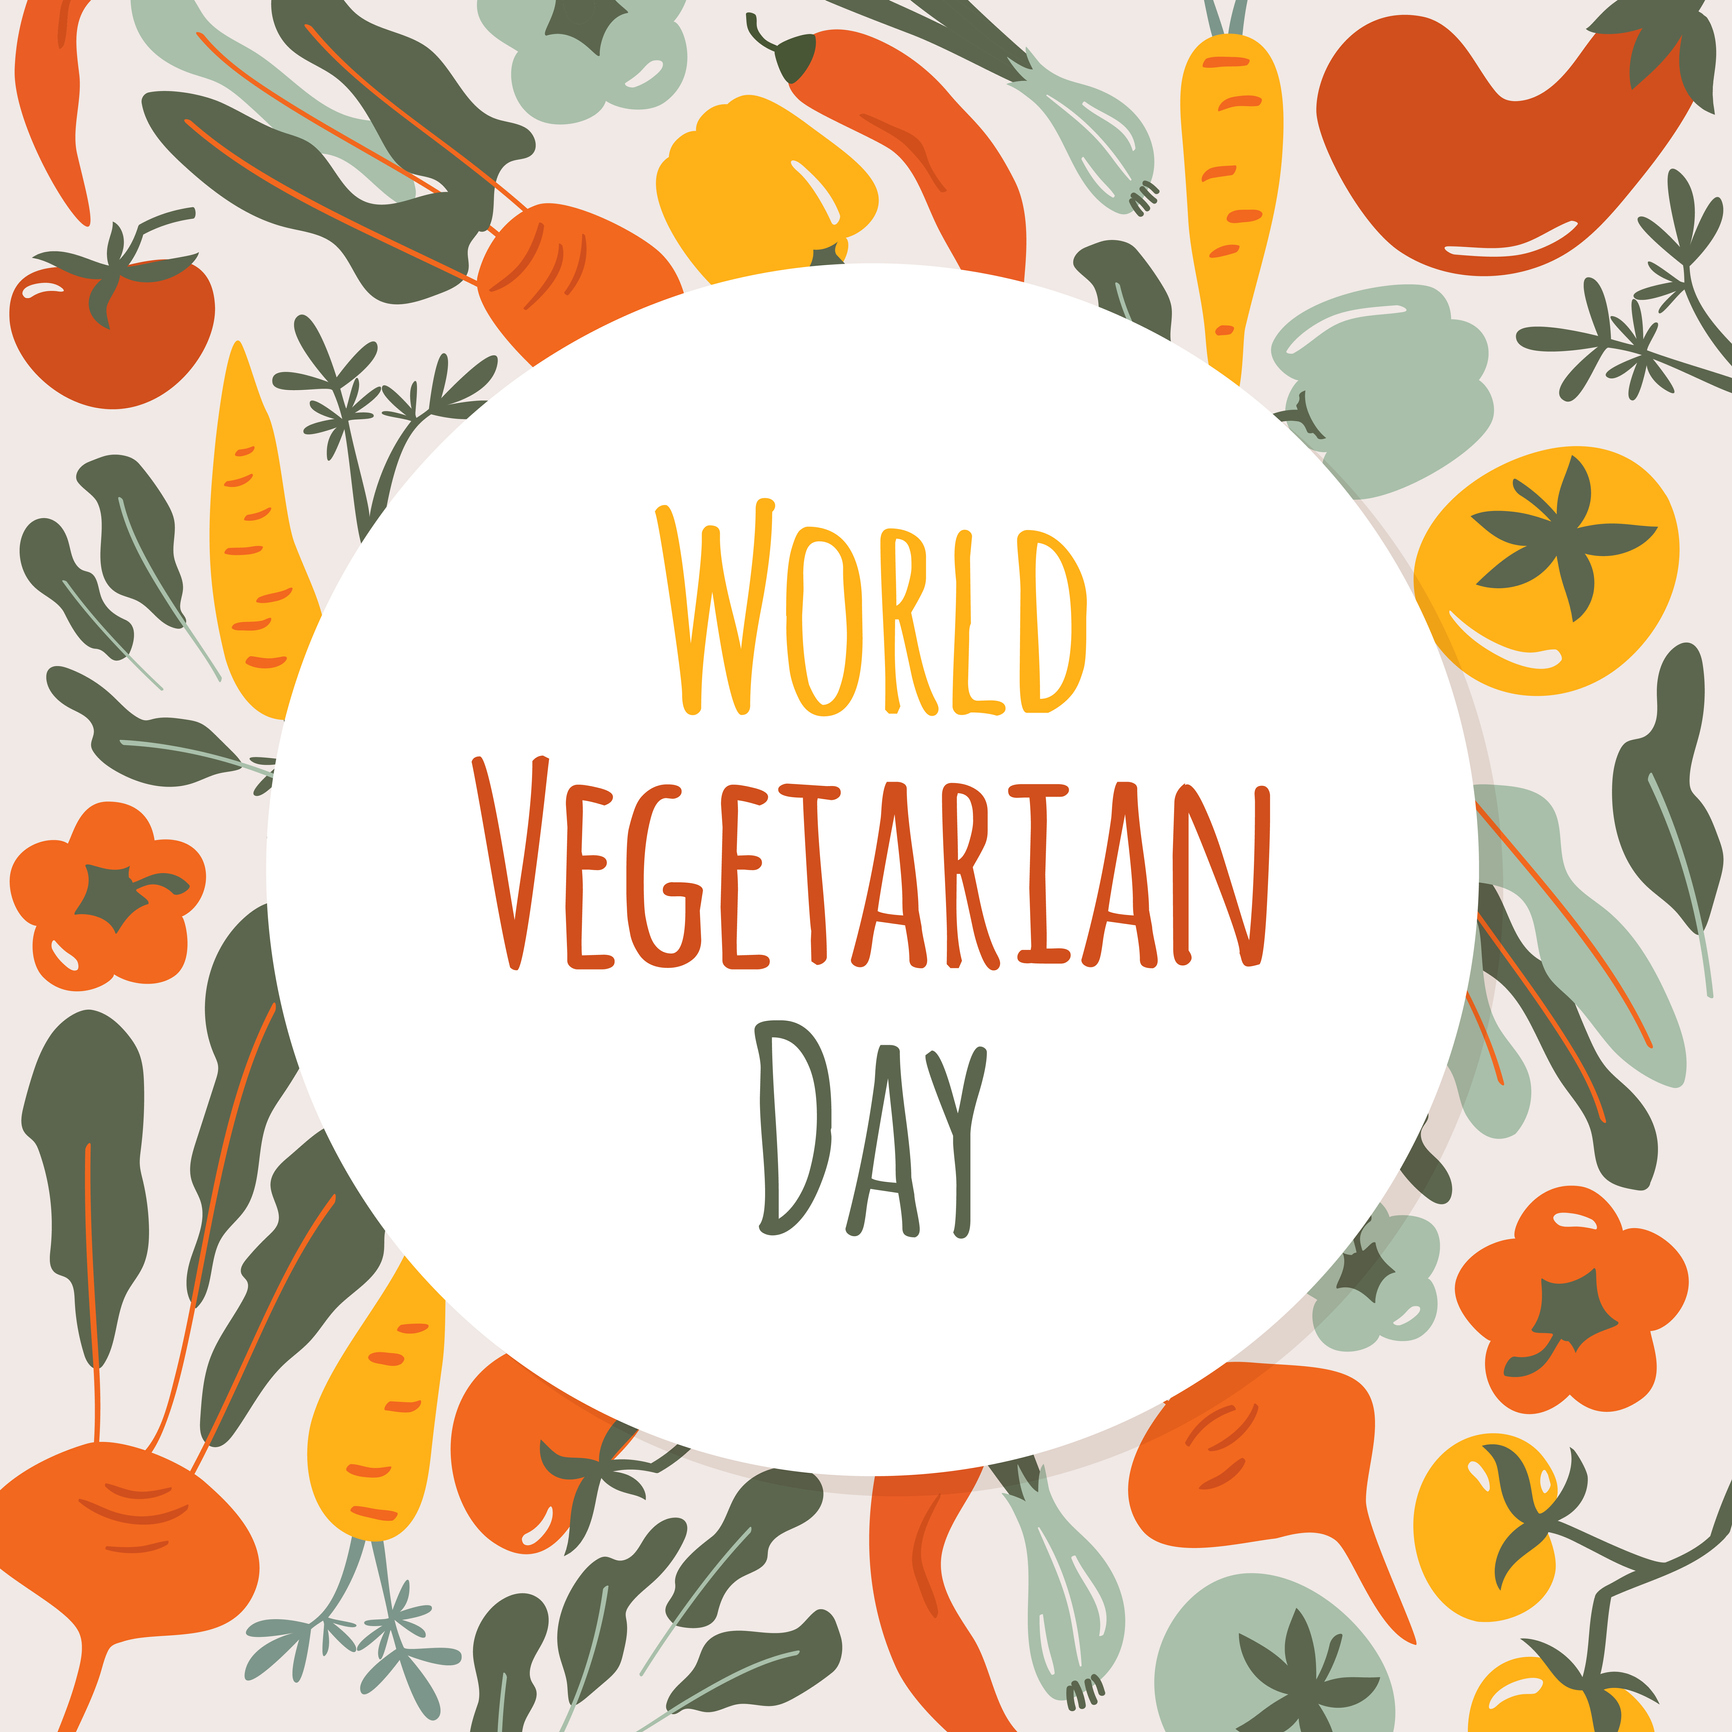 Celebrating World Vegetarian Day